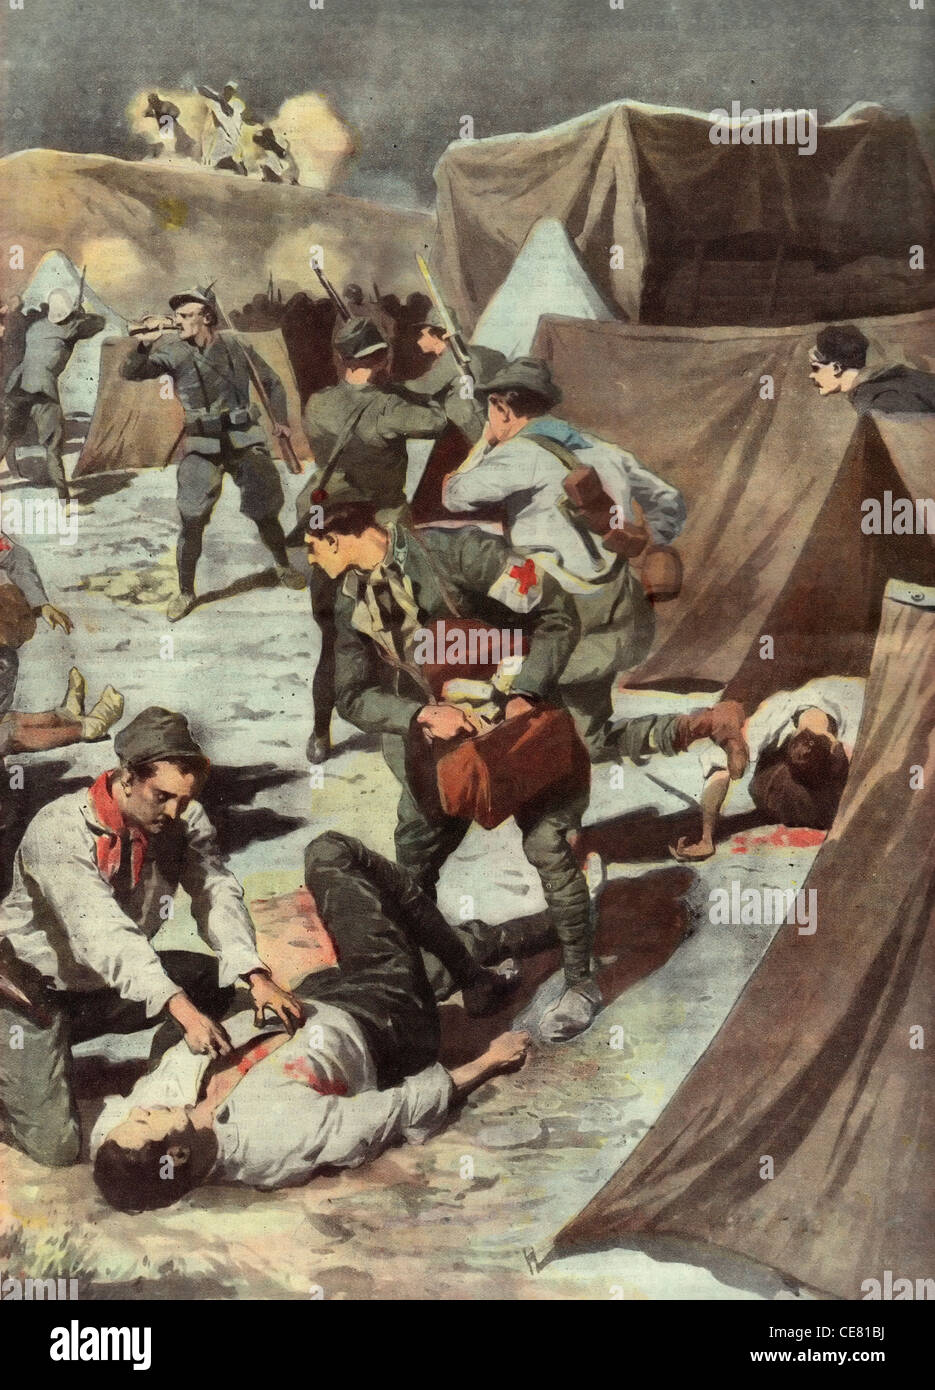 'The cowardice of the enemy kills our sleep' Italian viewpoint during the Italo-Turkish War, 1912 Stock Photo